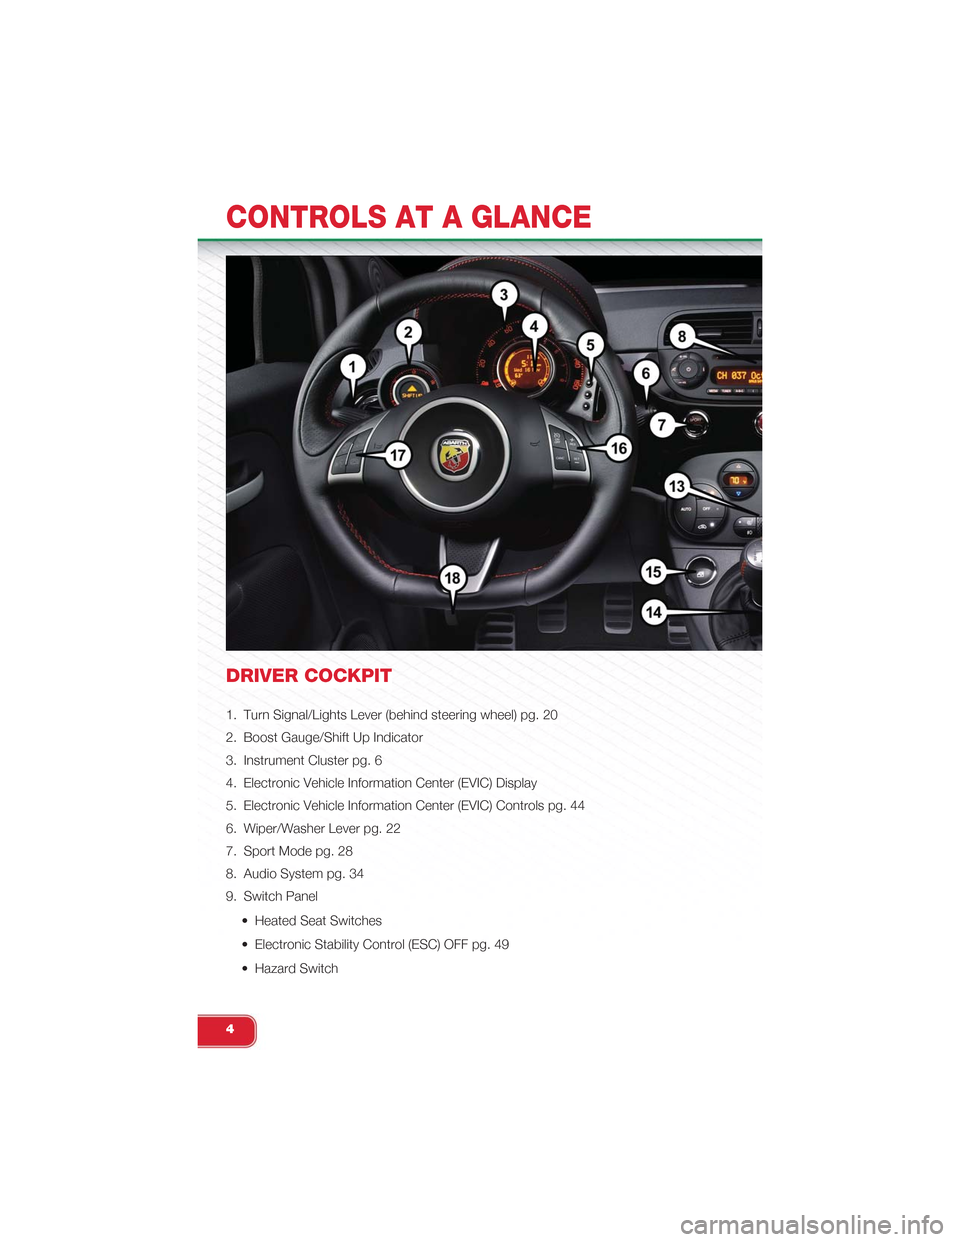 FIAT 500 ABARTH 2014 2.G User Guide DRIVER COCKPIT
1. Turn Signal/Lights Lever (behind steering wheel) pg. 20
2. Boost Gauge/Shift Up Indicator
3. Instrument Cluster pg. 6
4. Electronic Vehicle Information Center (EVIC) Display
5. Elect